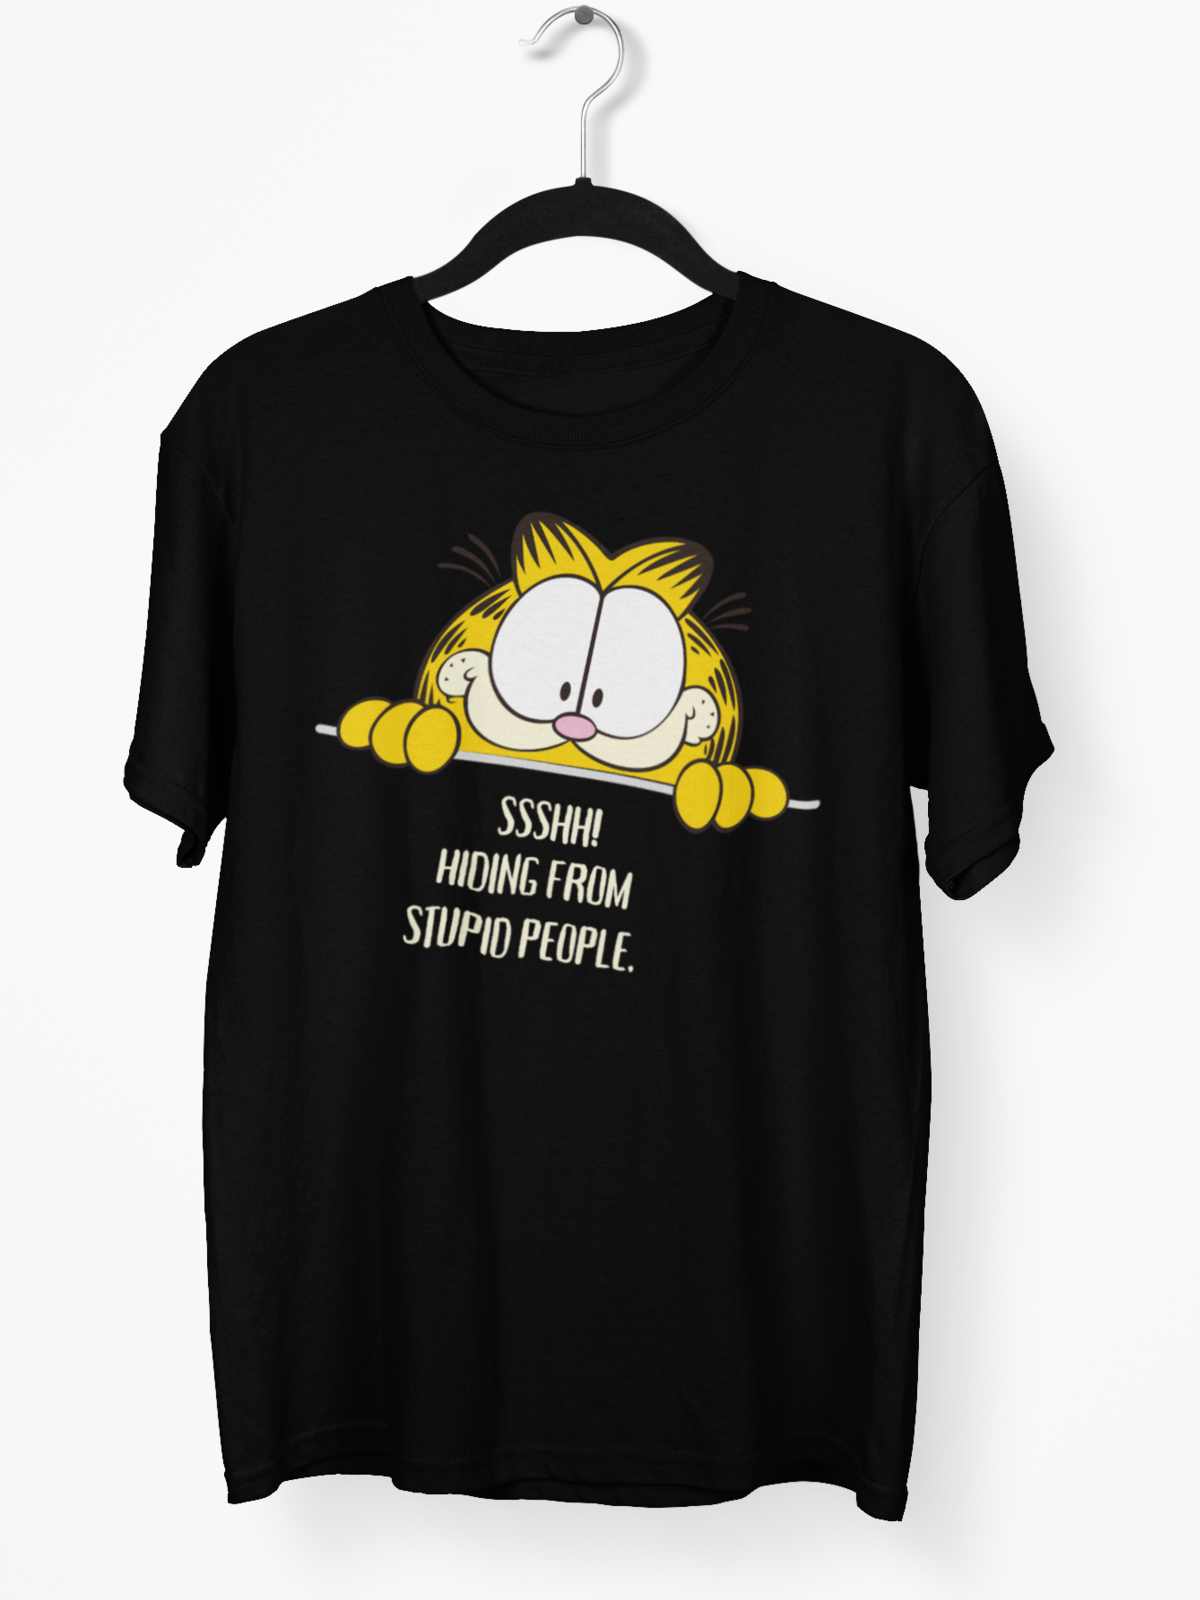 Hiding From Stupid People: Garfield